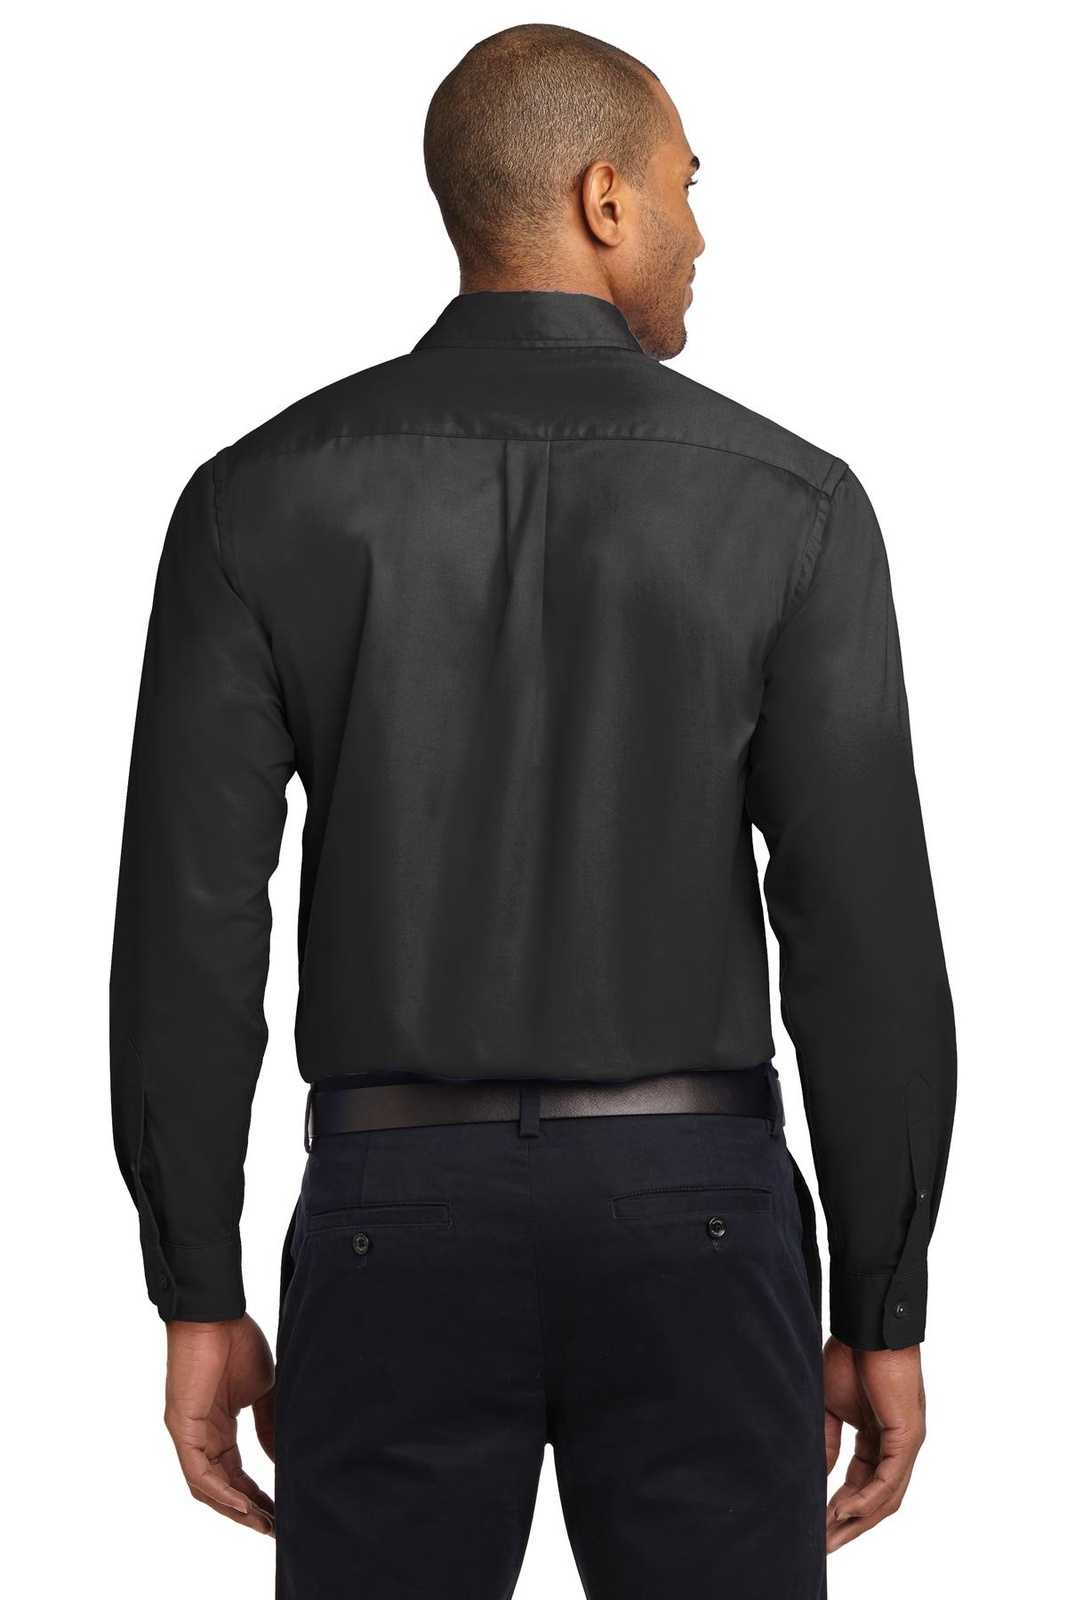 Port Authority S608 Long Sleeve Easy Care Shirt - Black Light Stone - HIT a Double - 2